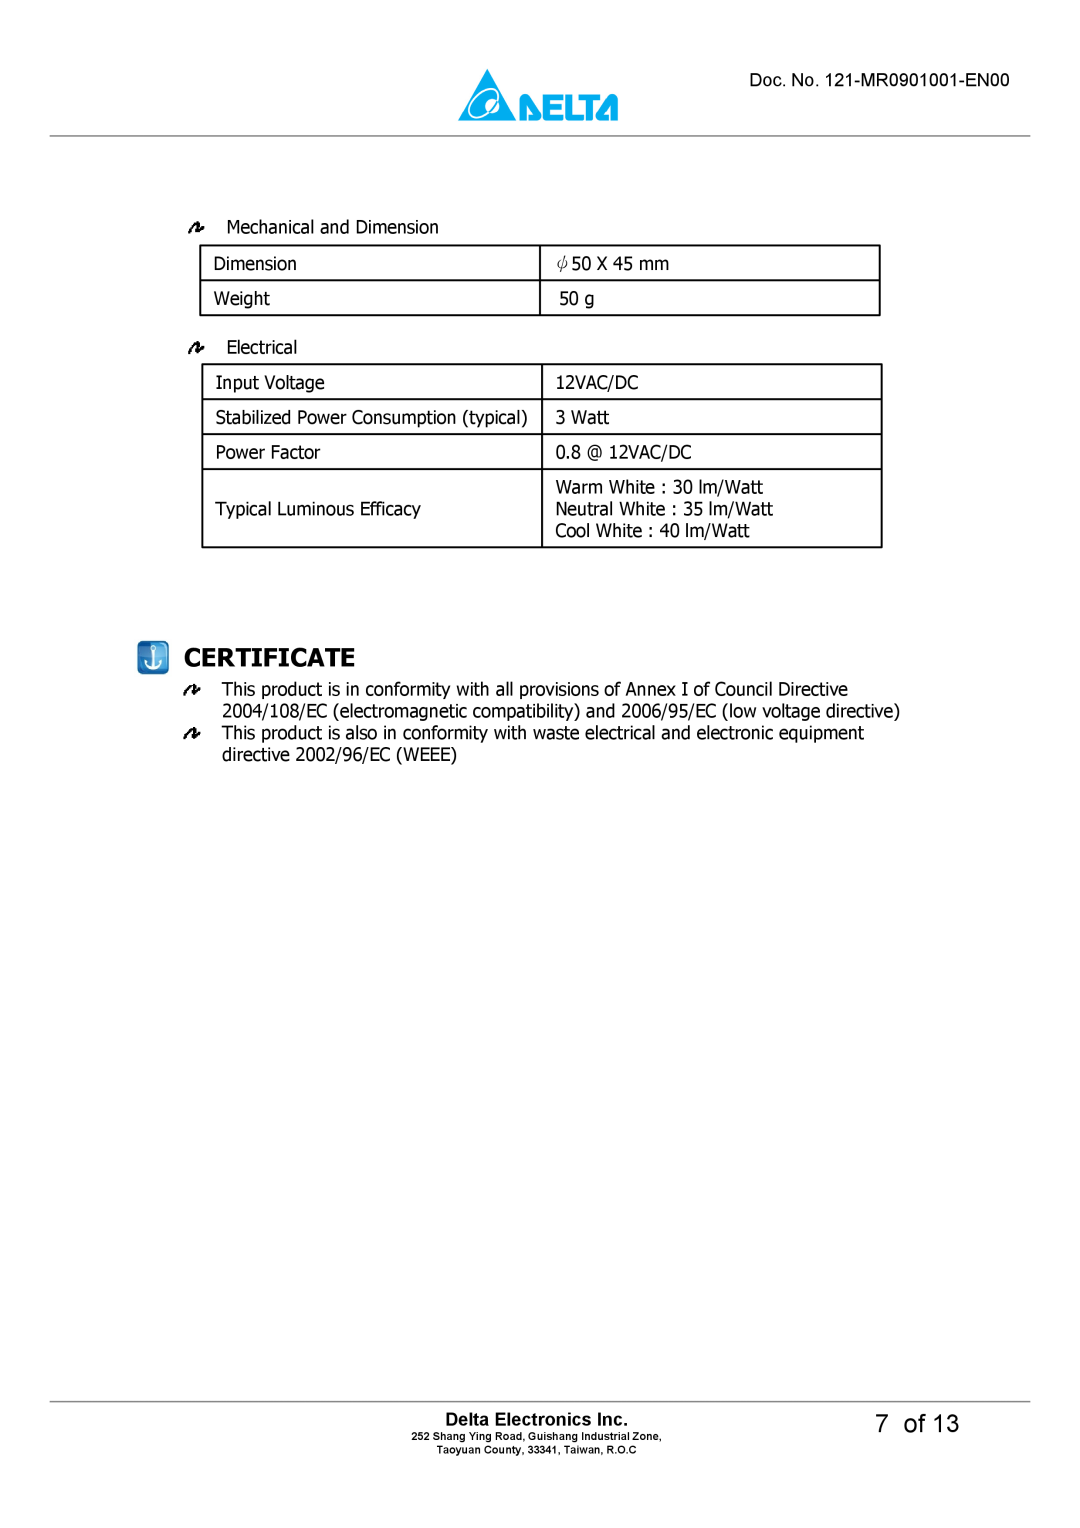 Delta Electronics M6DT-03LB manual Certificate, 7 of, Delta Electronics Inc 